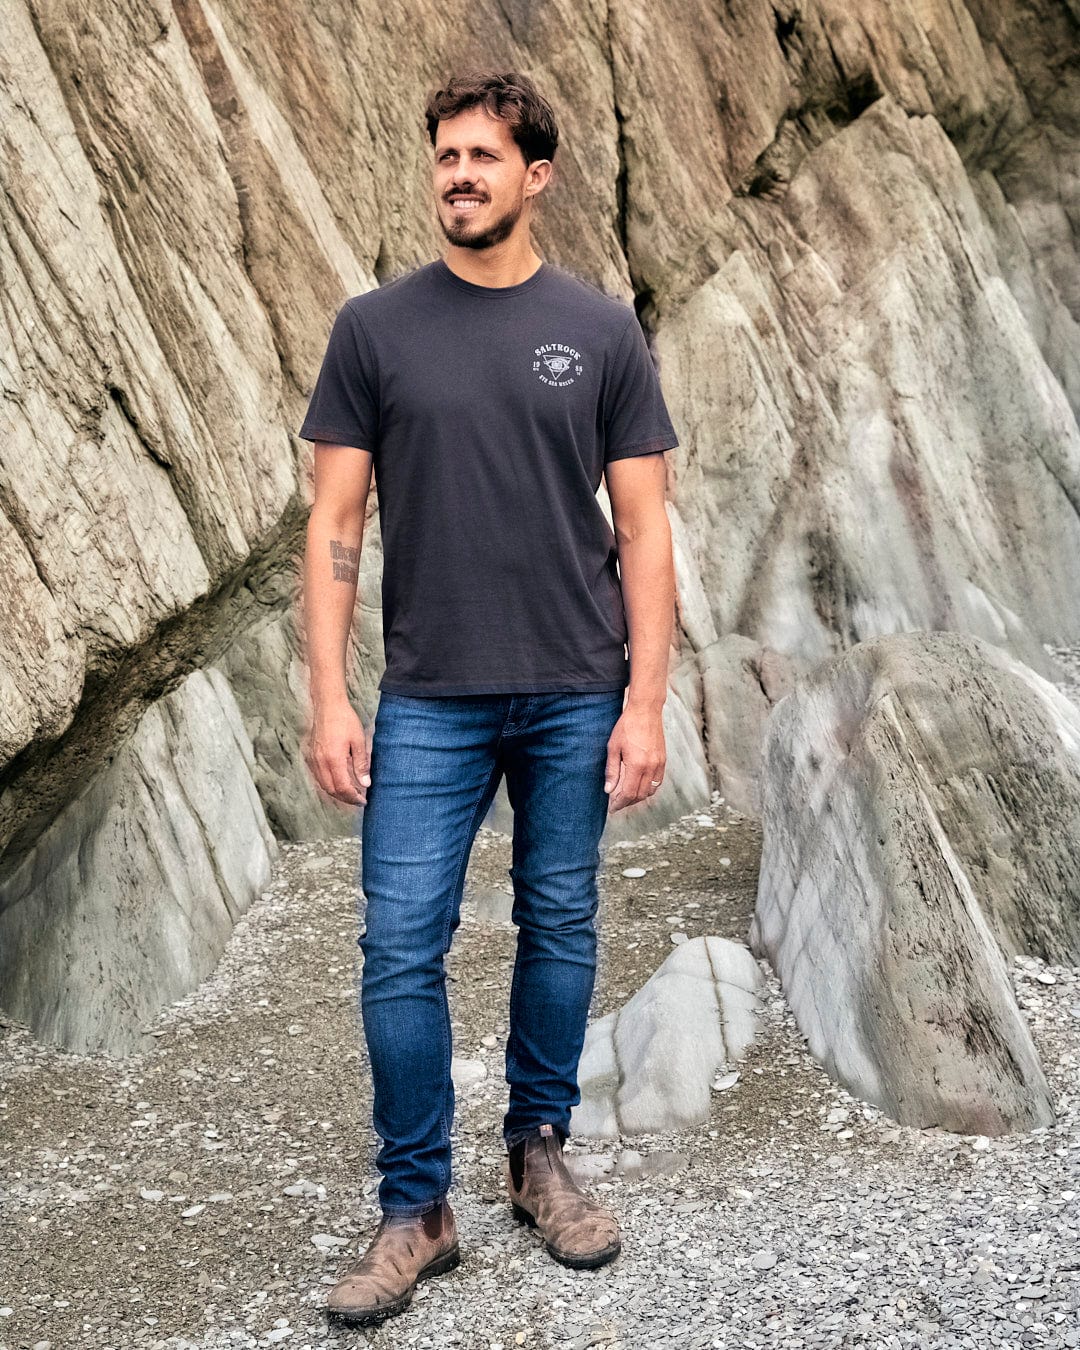 A man wearing an Eye Sea Waves - Mens Short Sleeve Stonewash T-shirt - Dark Grey standing in front of rocks representing the Saltrock branding.